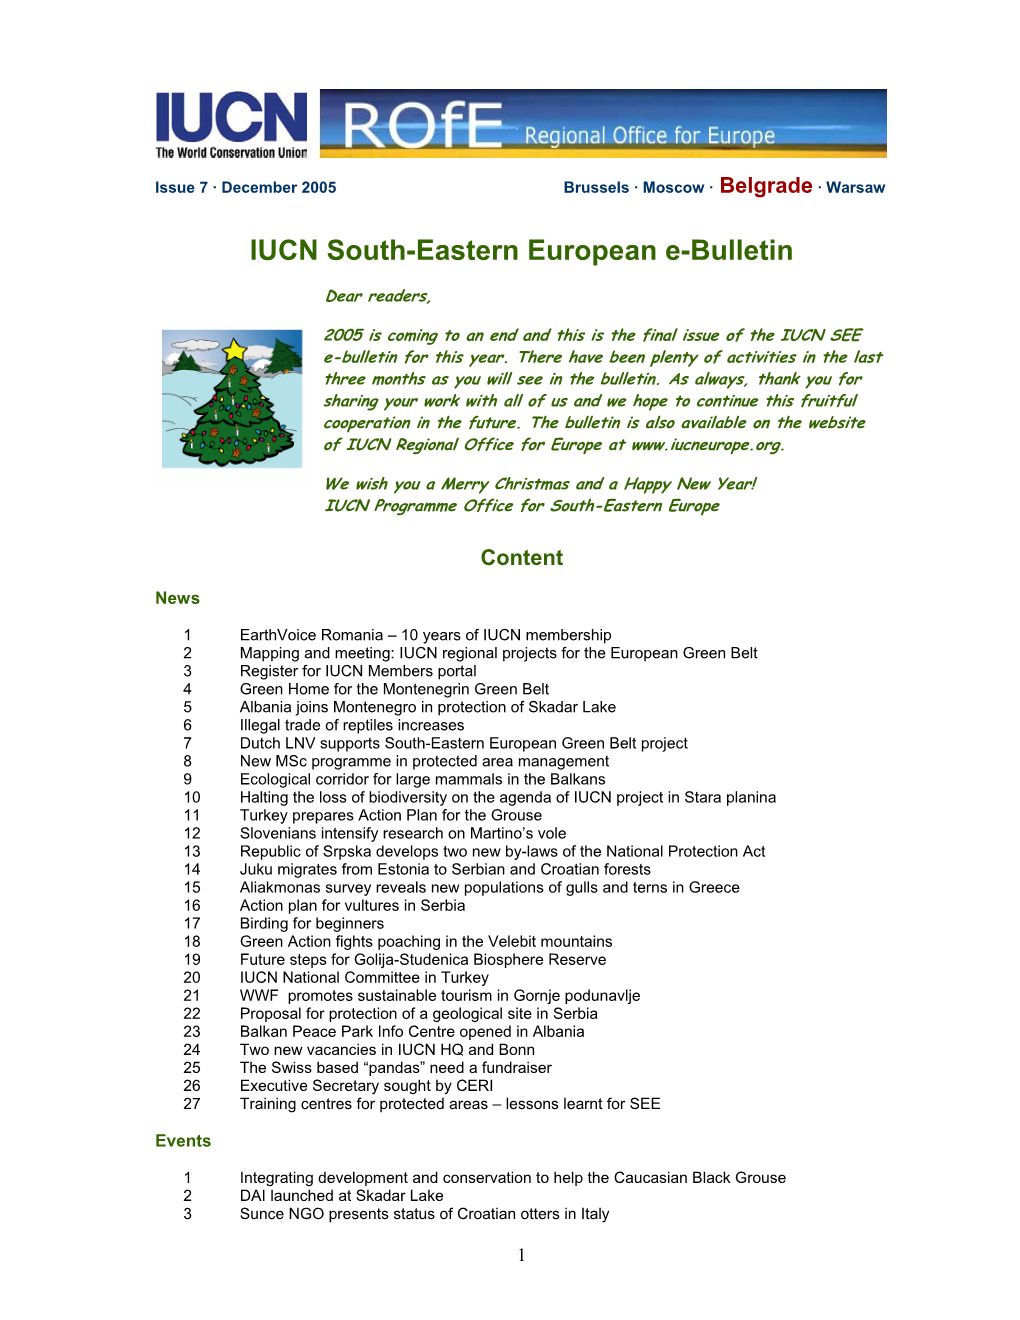 IUCN South-Eastern European E-Bulletin 7